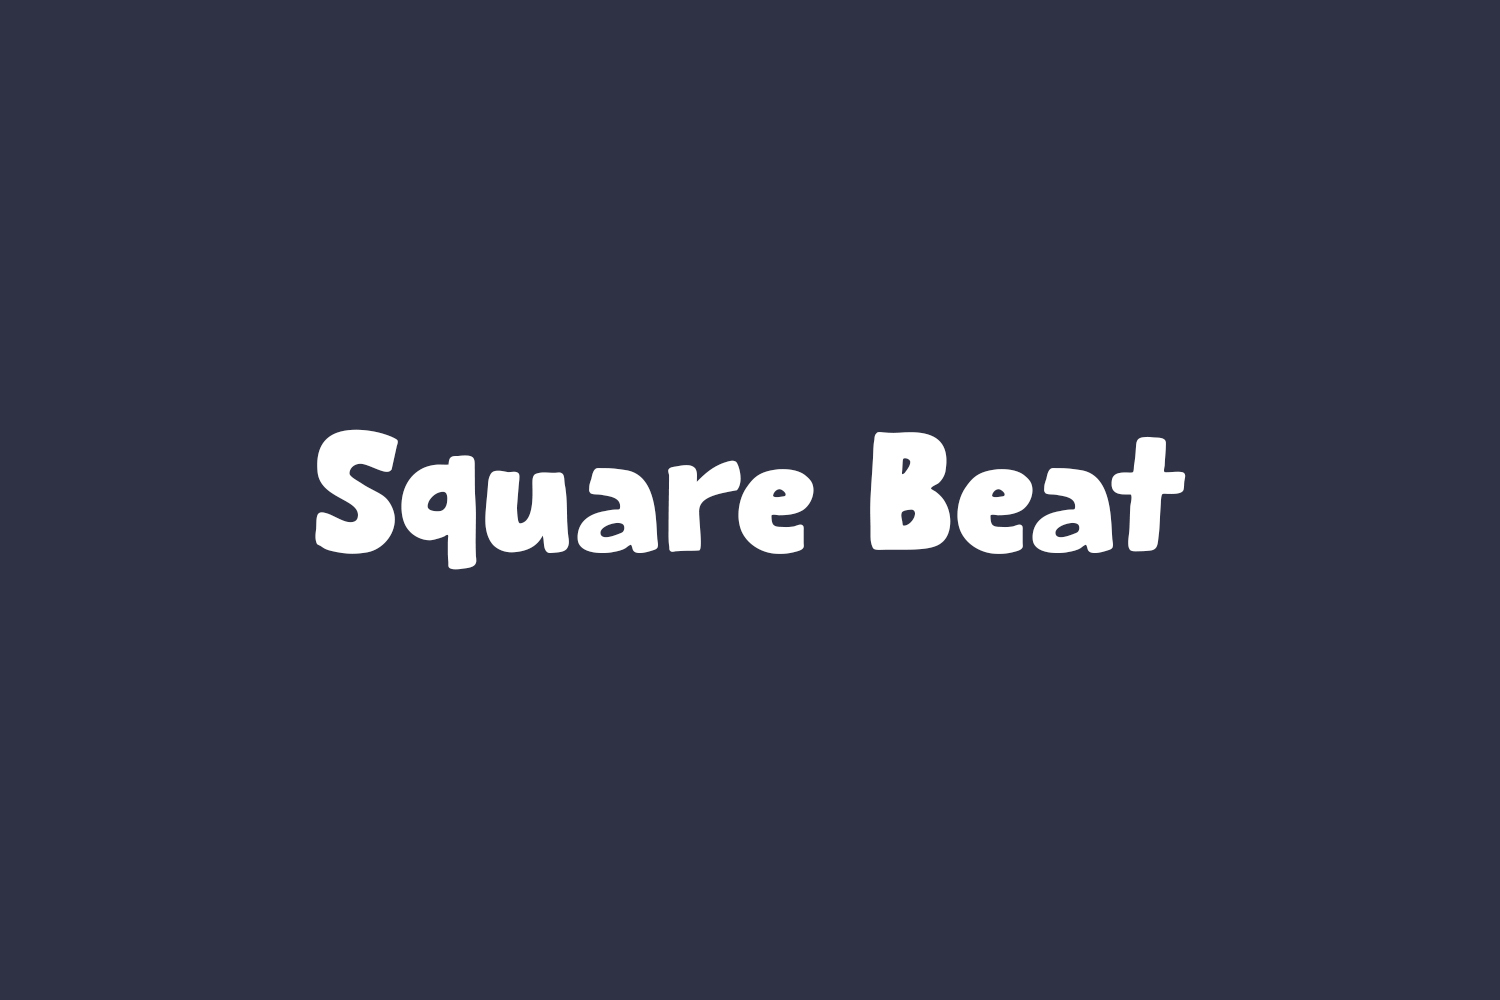 Square Beat Free Font